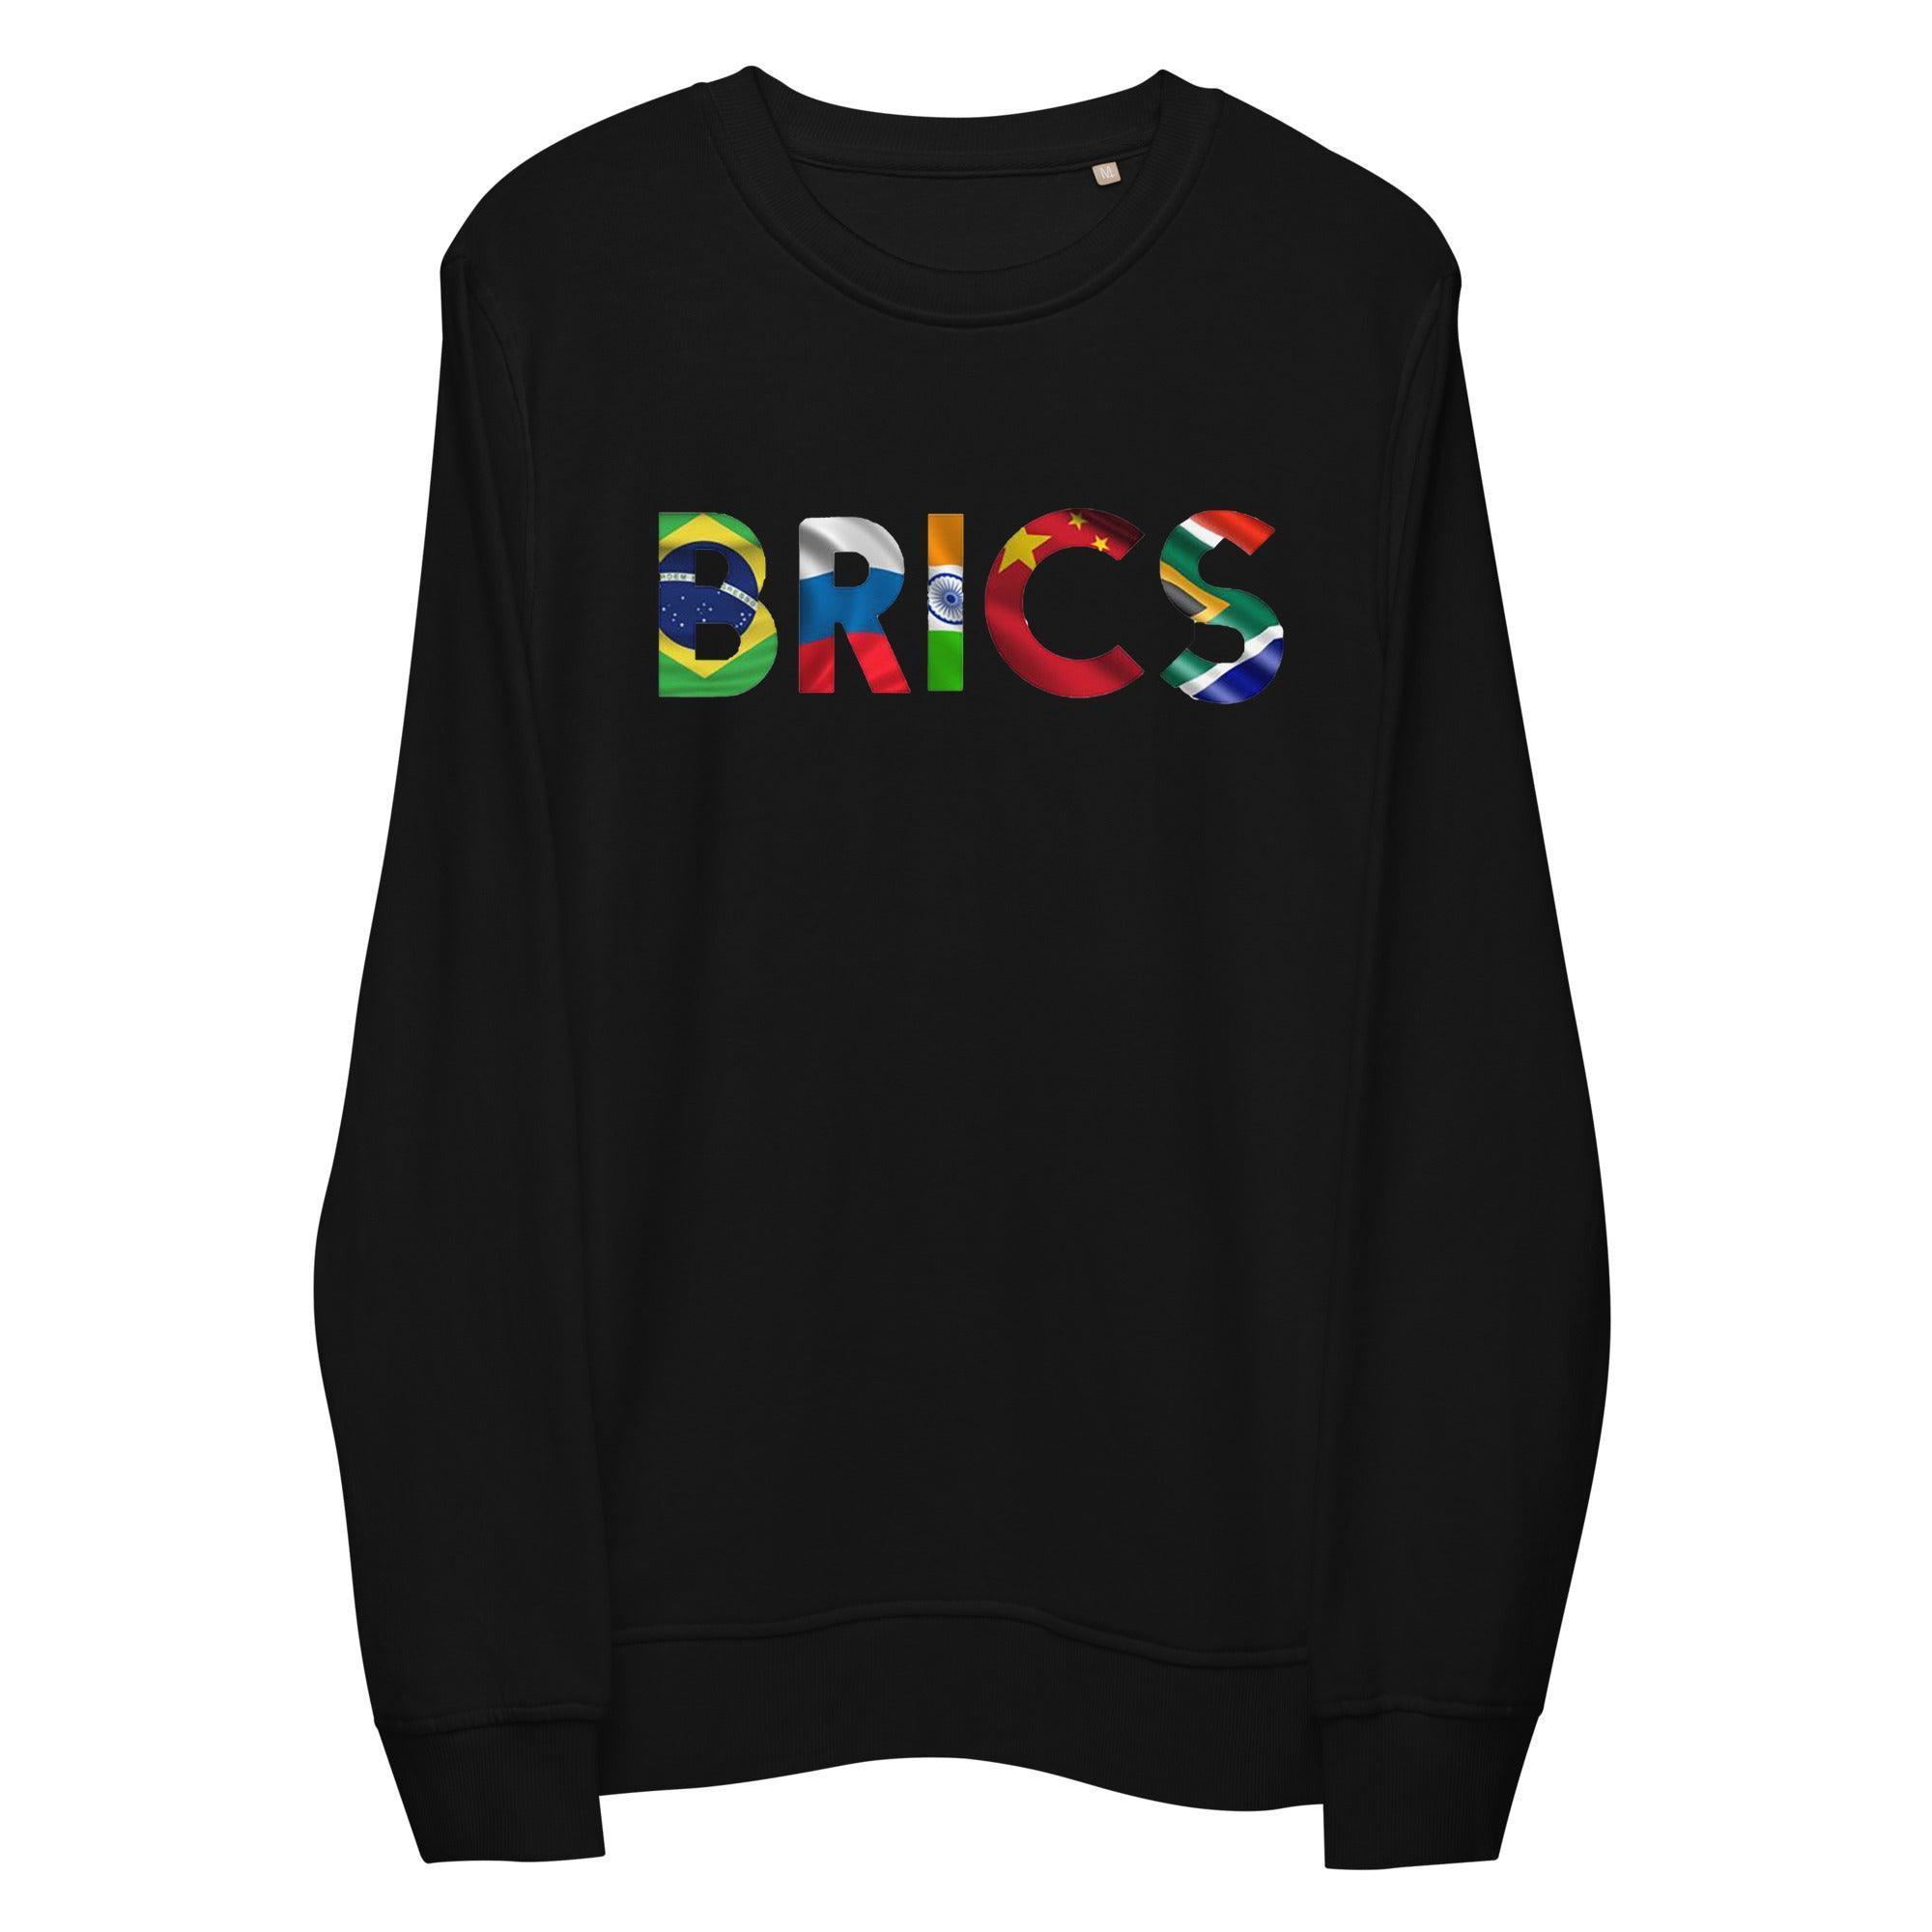 BRICS Nation Sweatshirt - InvestmenTees